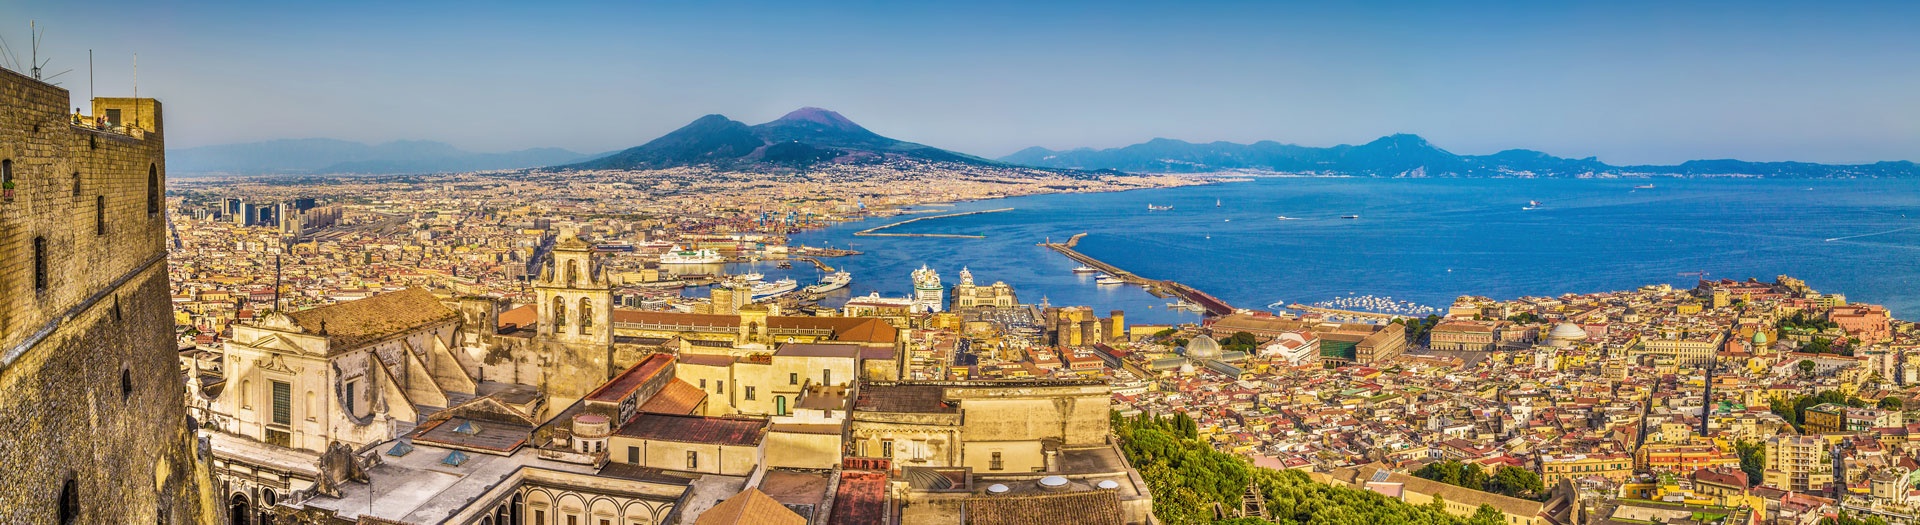 Napoli e la Costa Amalfitana